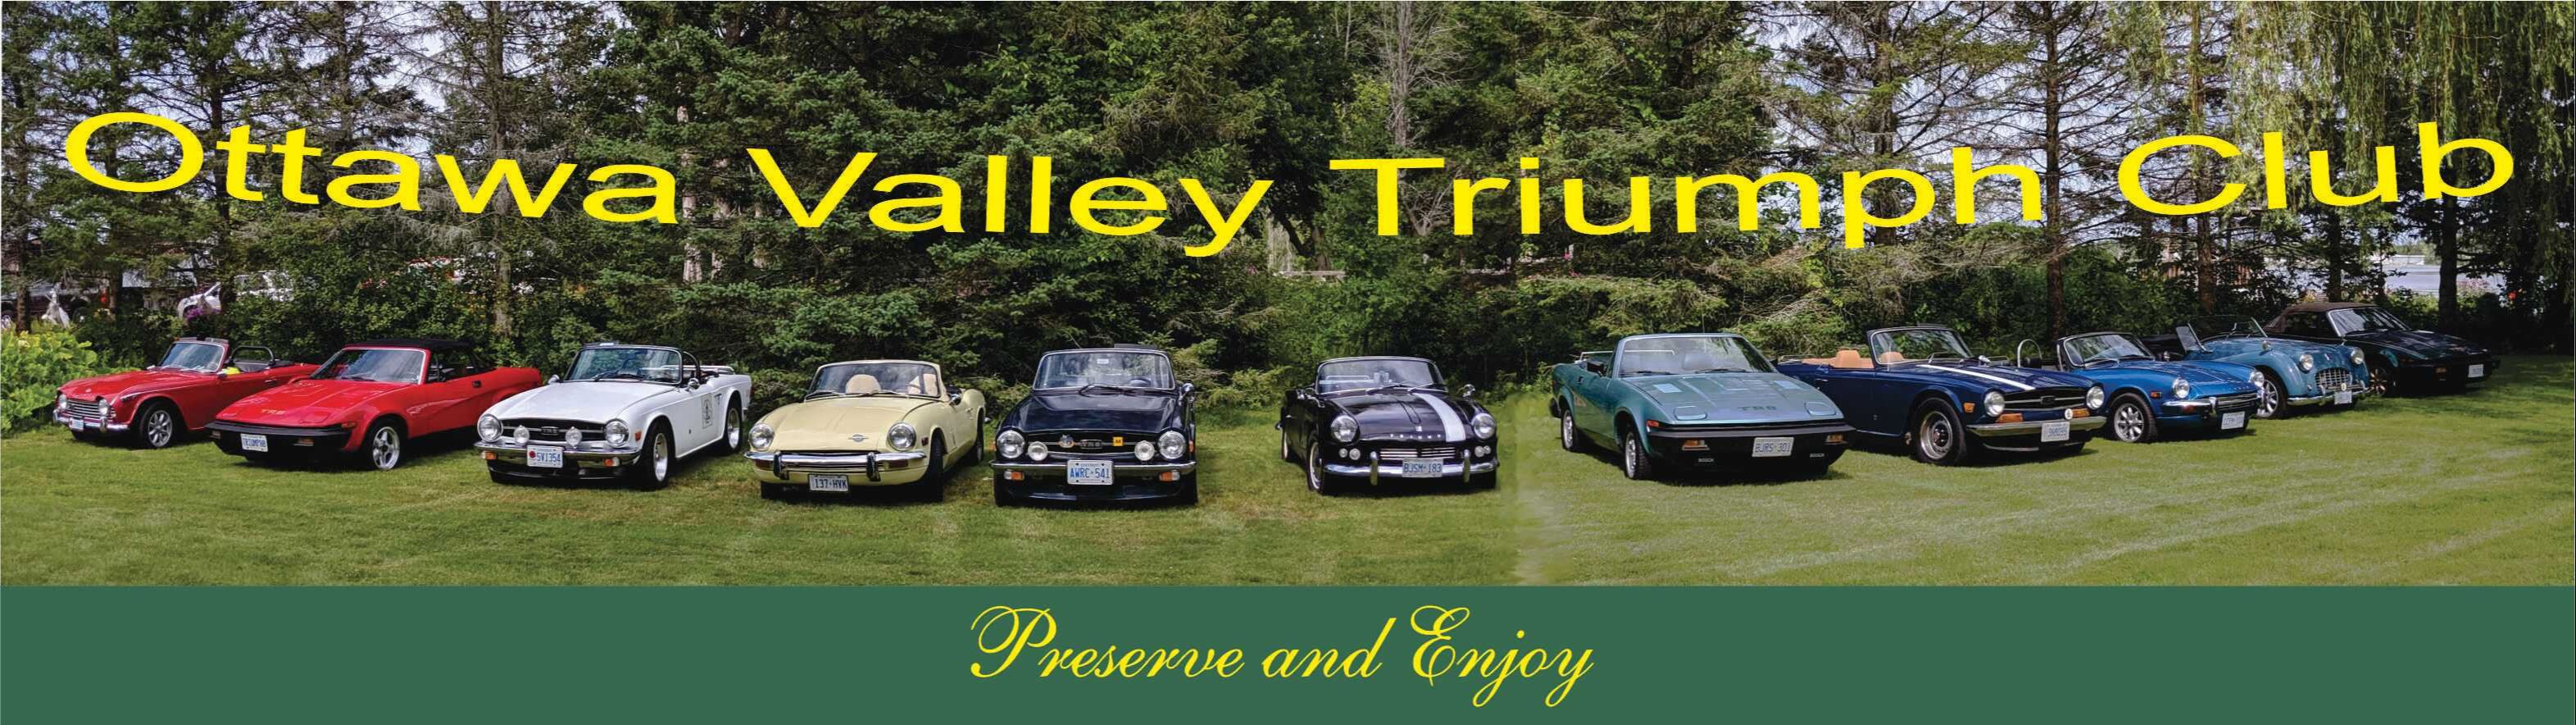 Ottawa Valley Triumph Club (OVTC) - Home